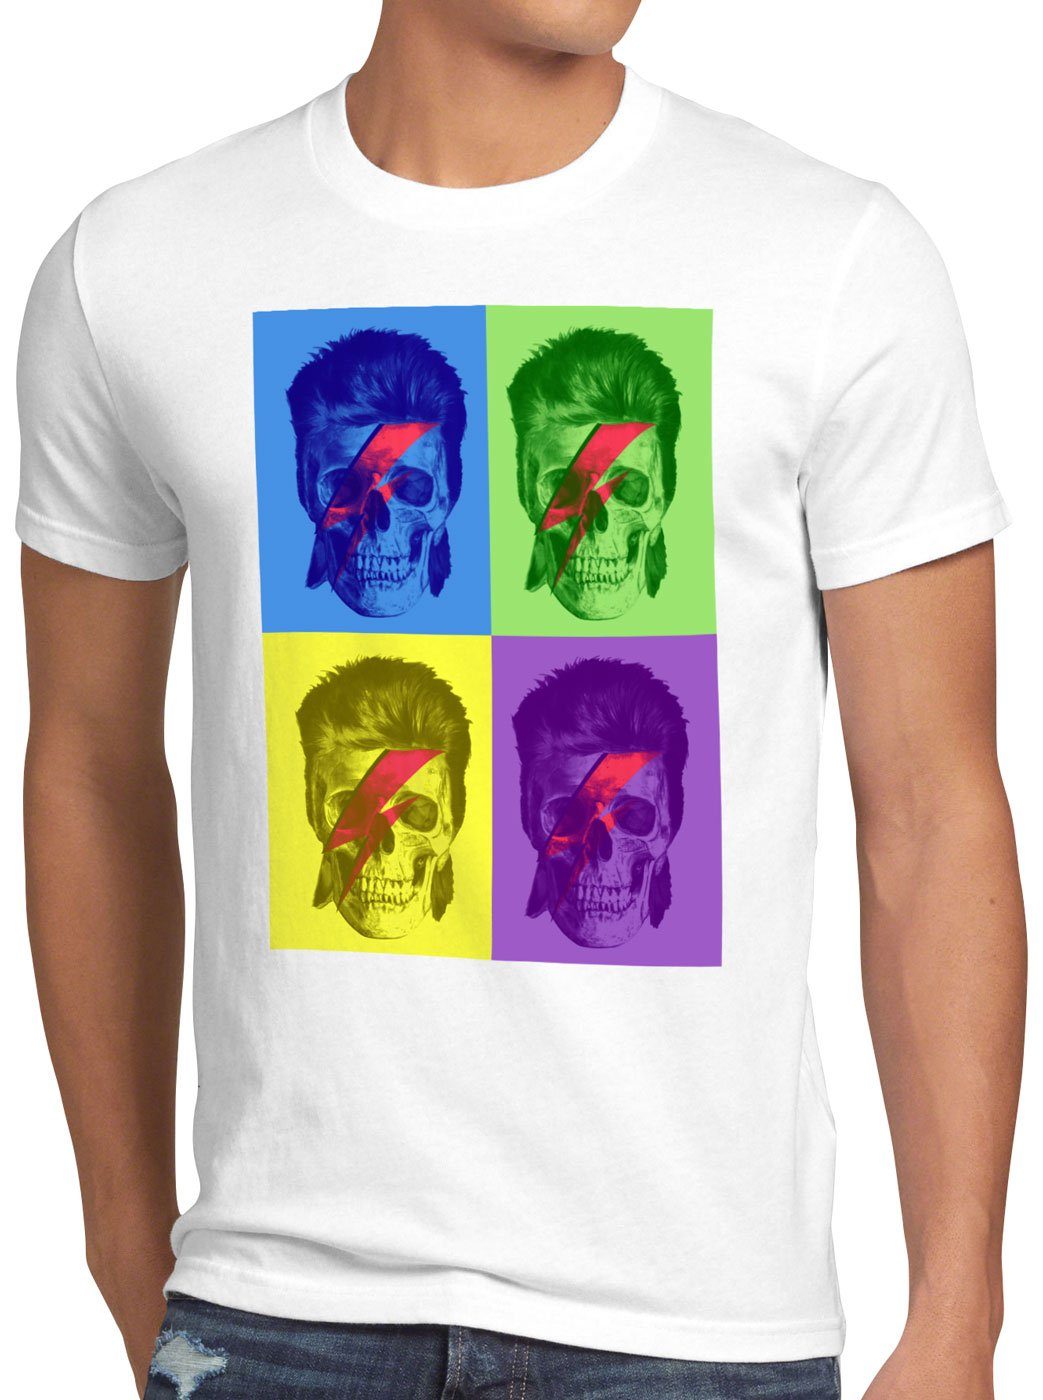 style3 Print-Shirt Herren T-Shirt weiß pop-art Bowie Skull turntable retro warhol